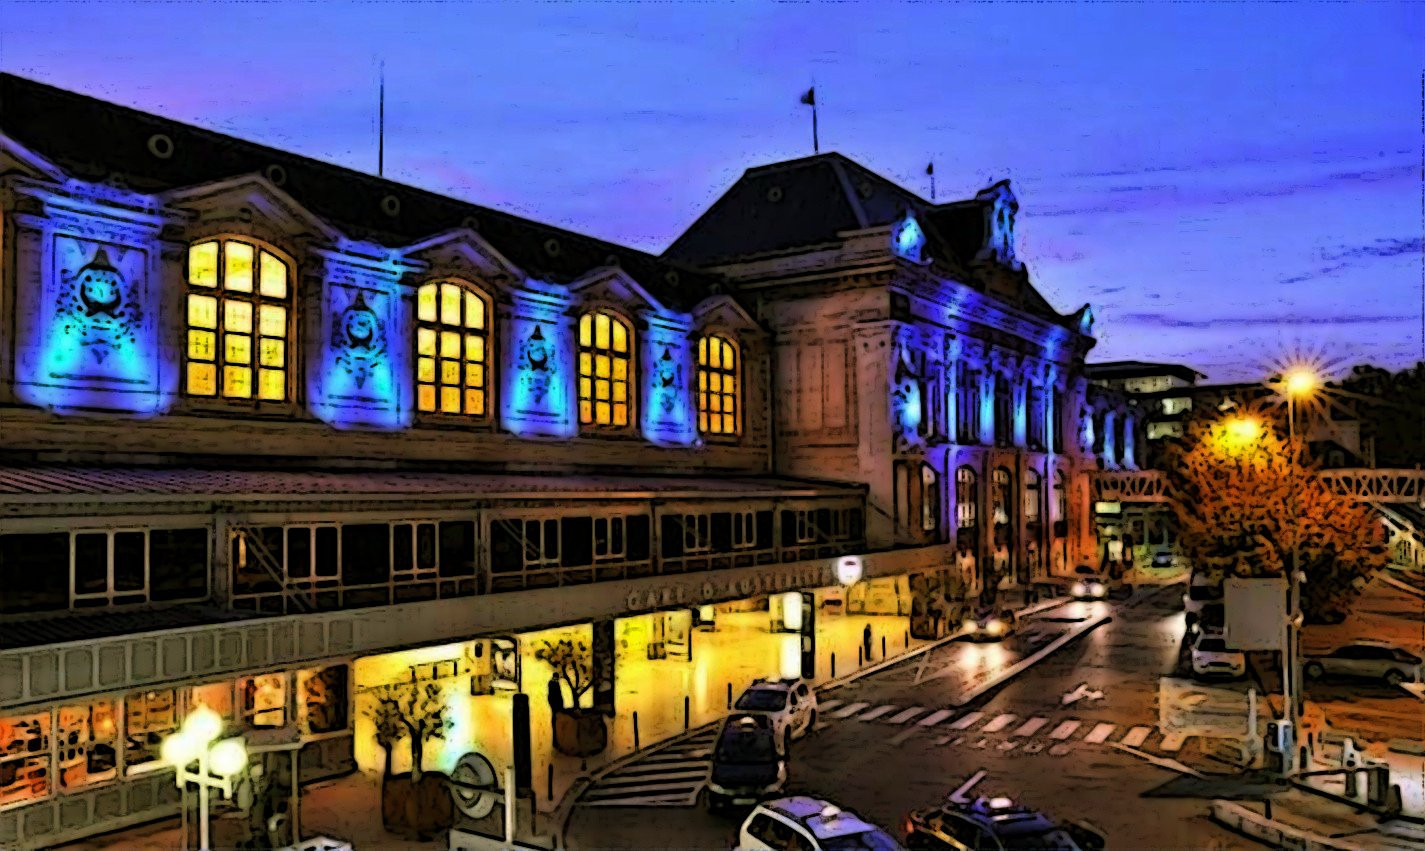 Paris Gare dAusterlitz night.jpg